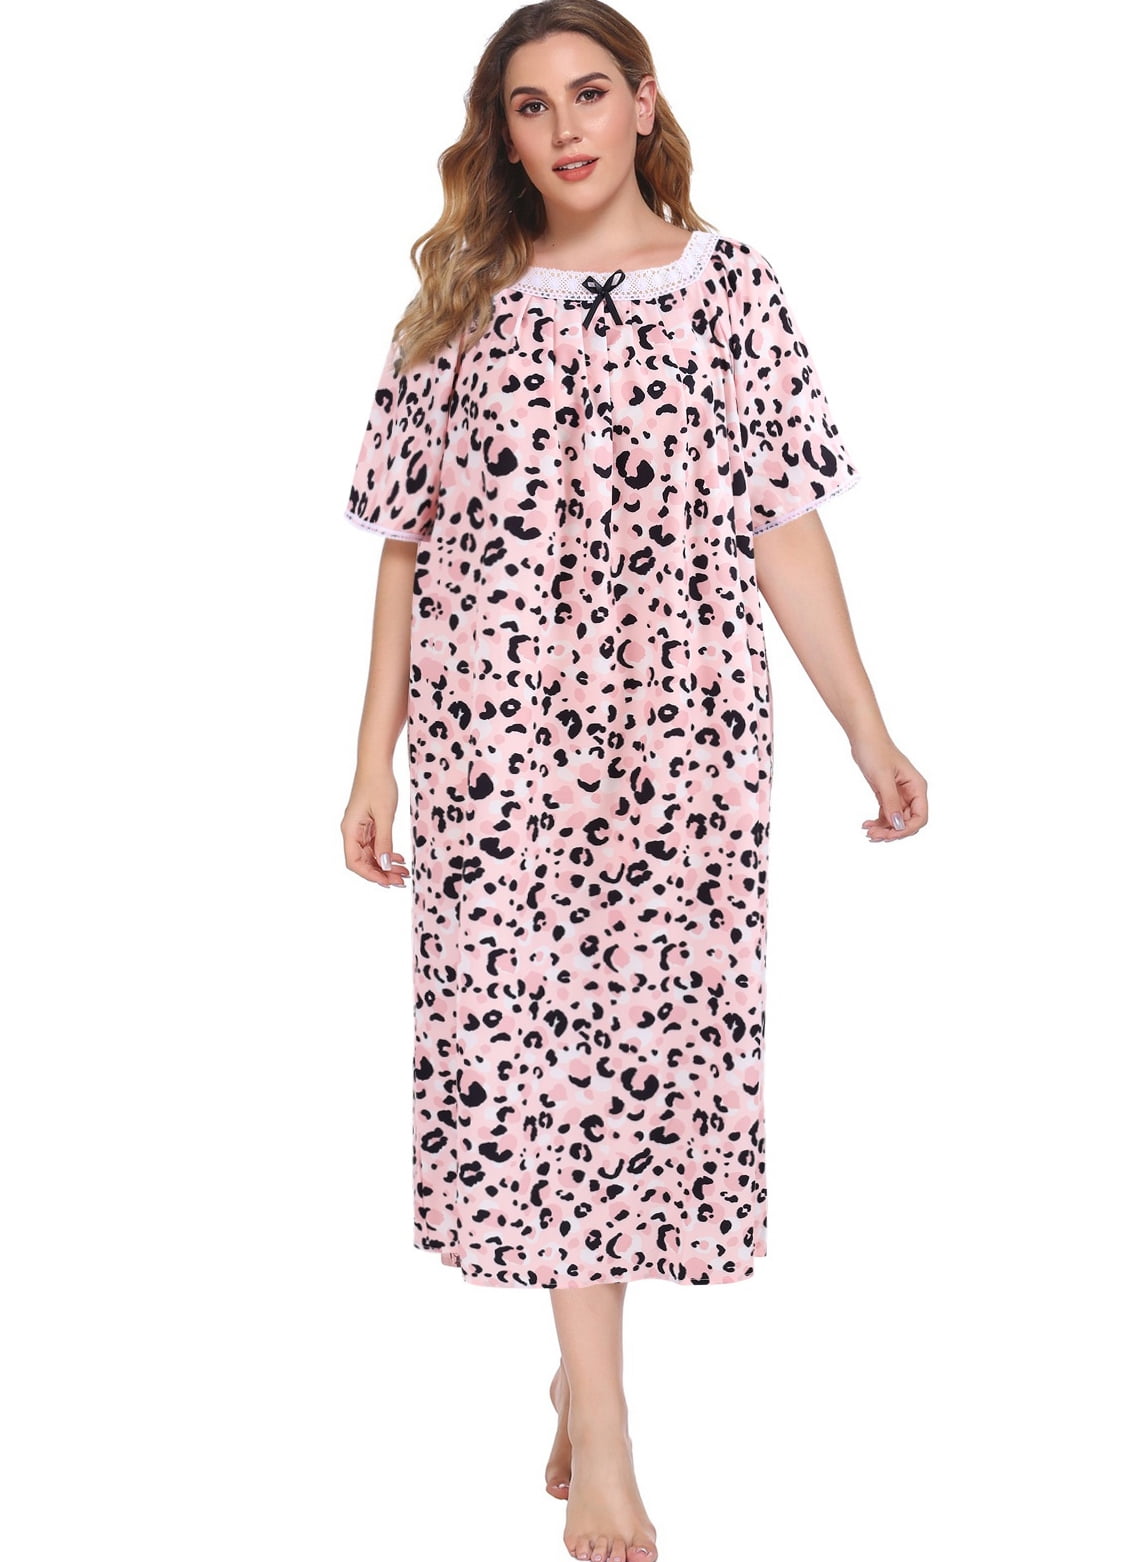 Women's Plus Size Nightgown Floral Print Long Sleepshirt Short Sleeve ...